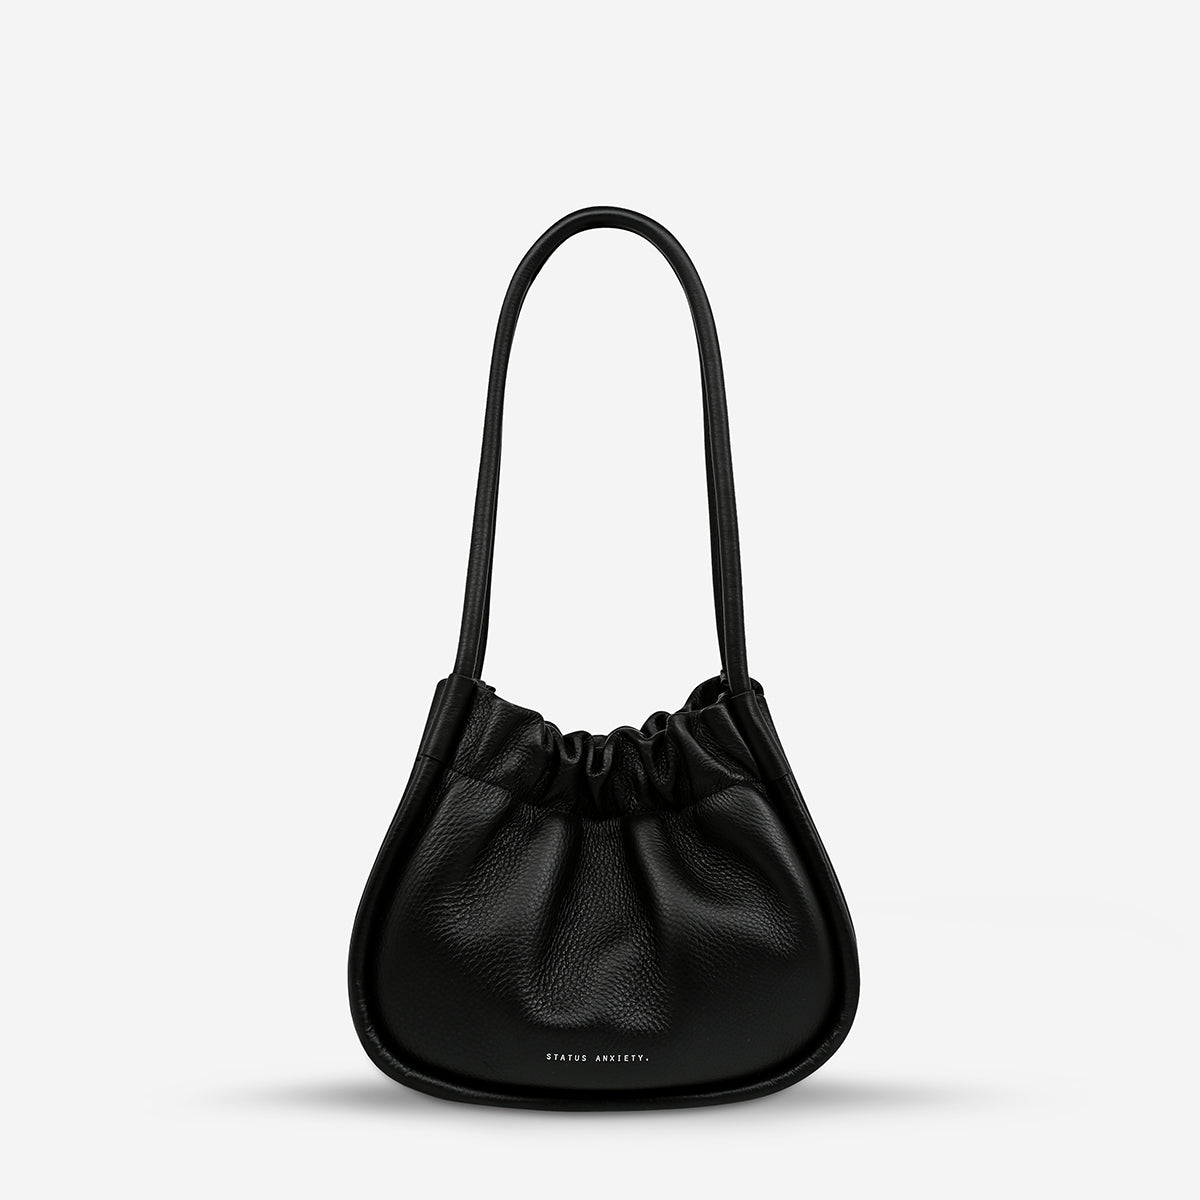 Ordinary Pleasures Women's Black Leather Handbag - Status Anxiety - Mandi at Home